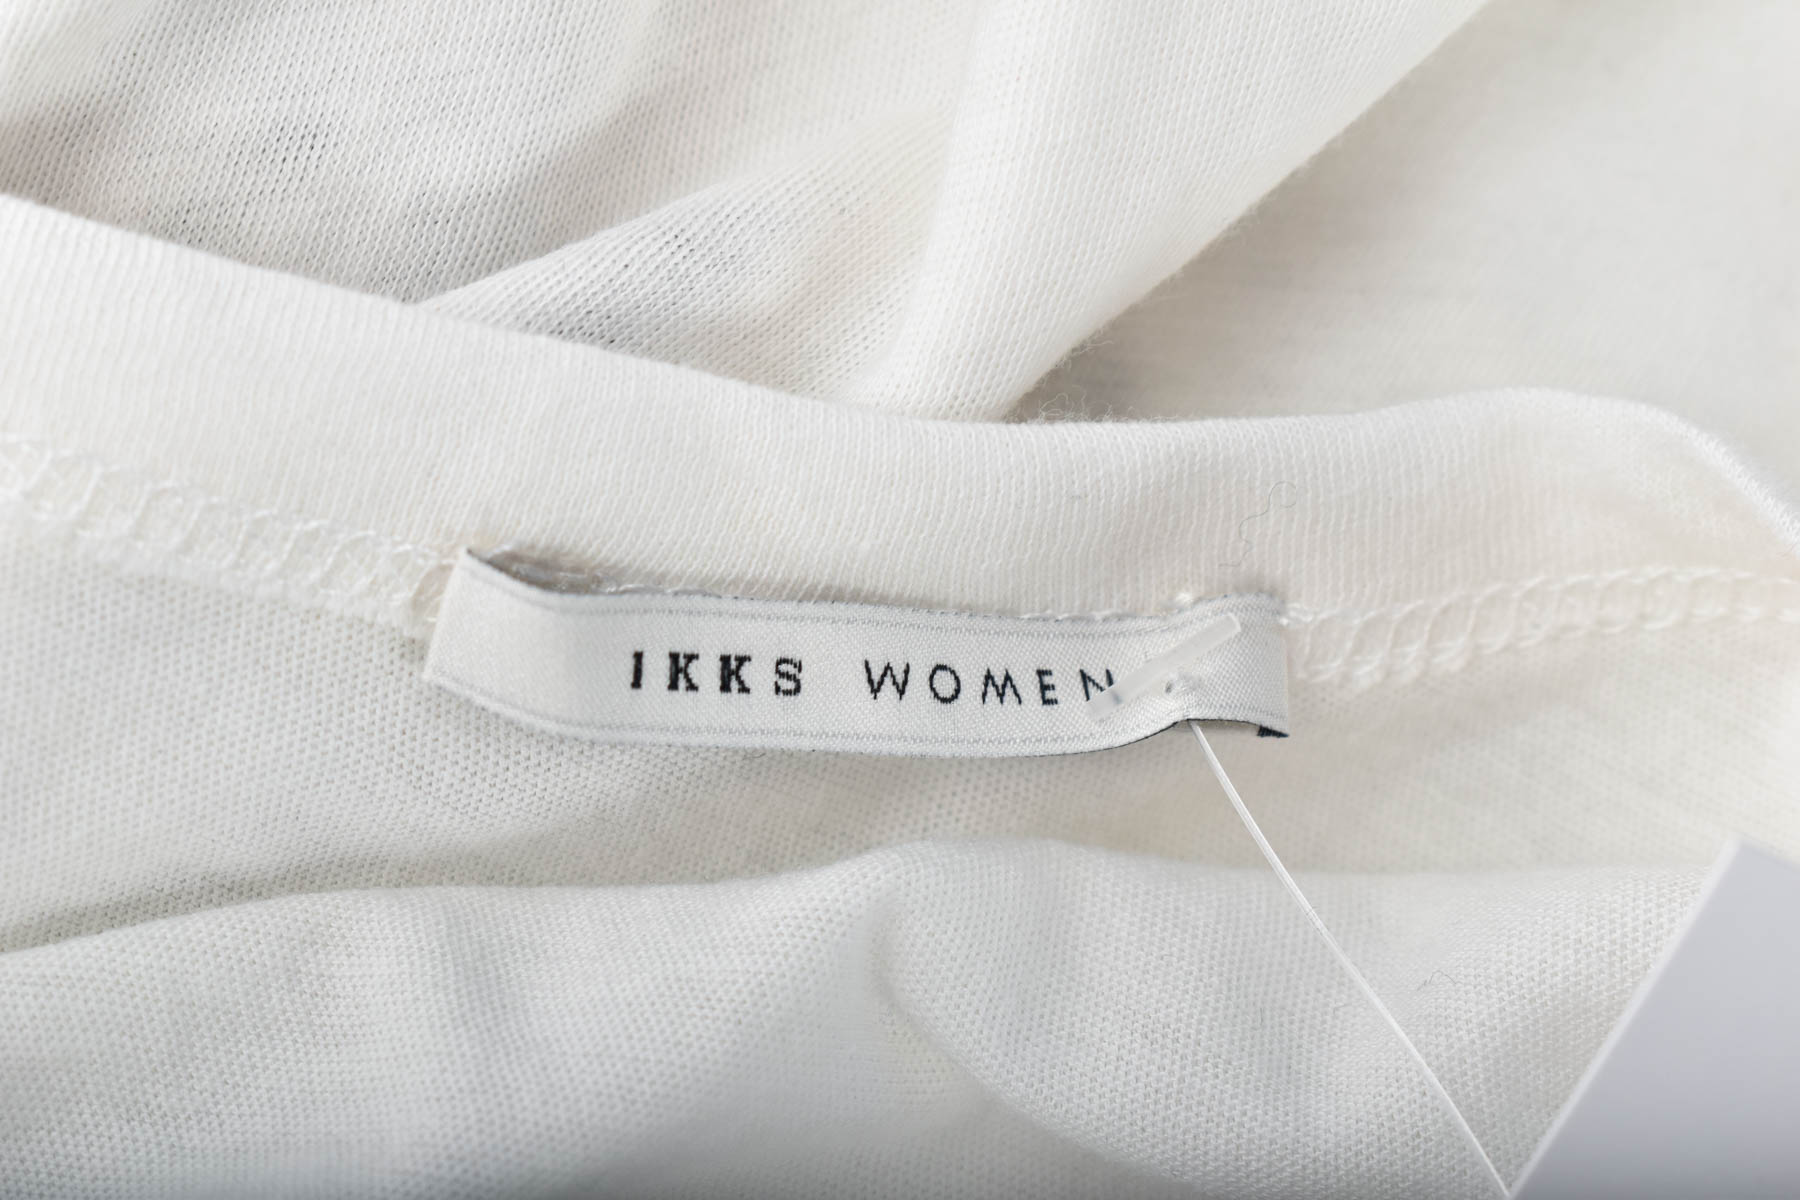 Women's t-shirt - IKKS WOMEN - 2